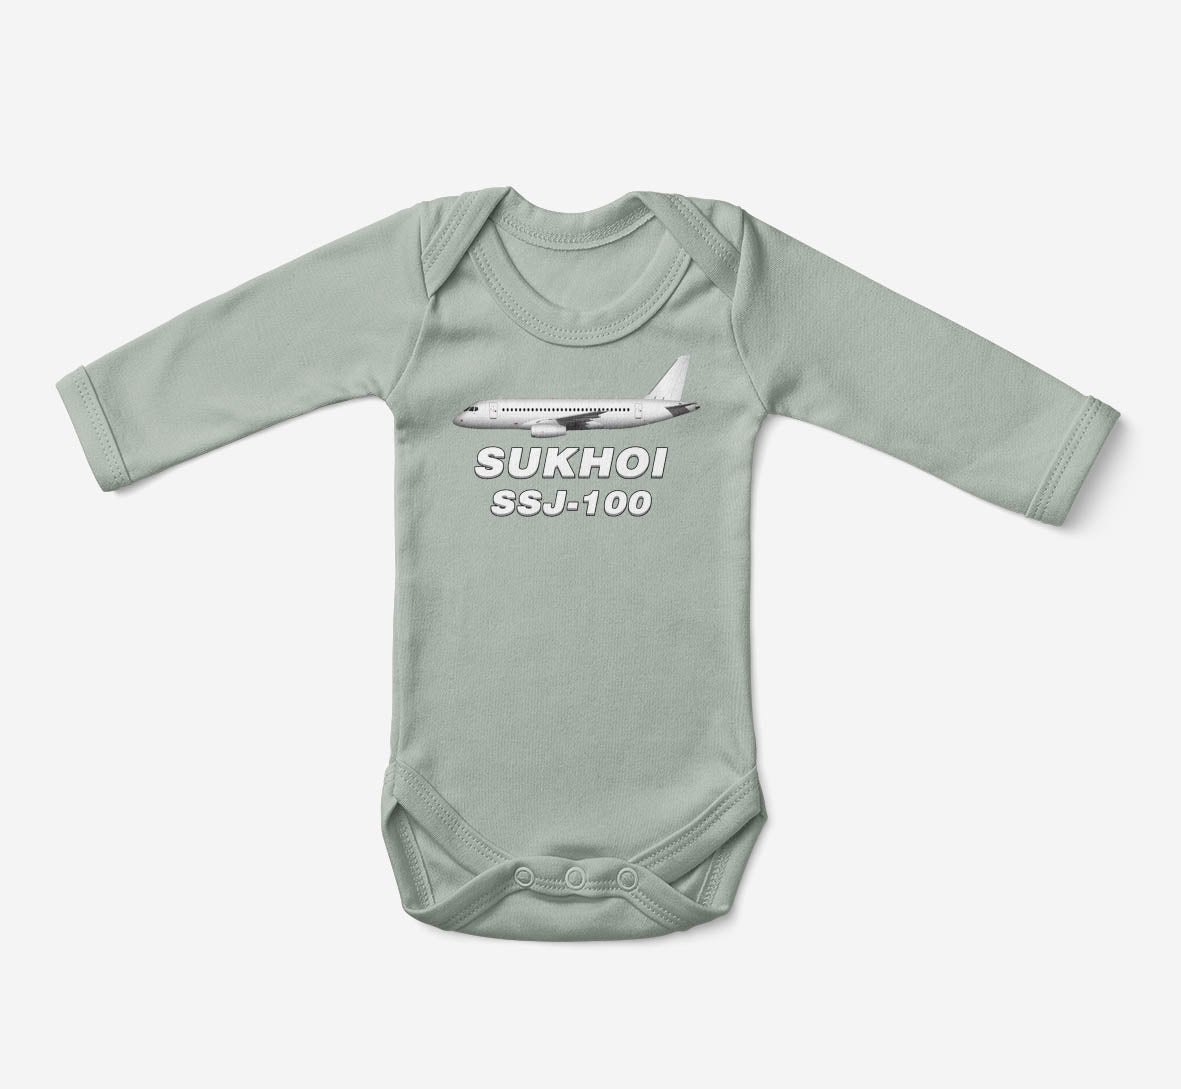 The Sukhoi Superjet 100 Designed Baby Bodysuits